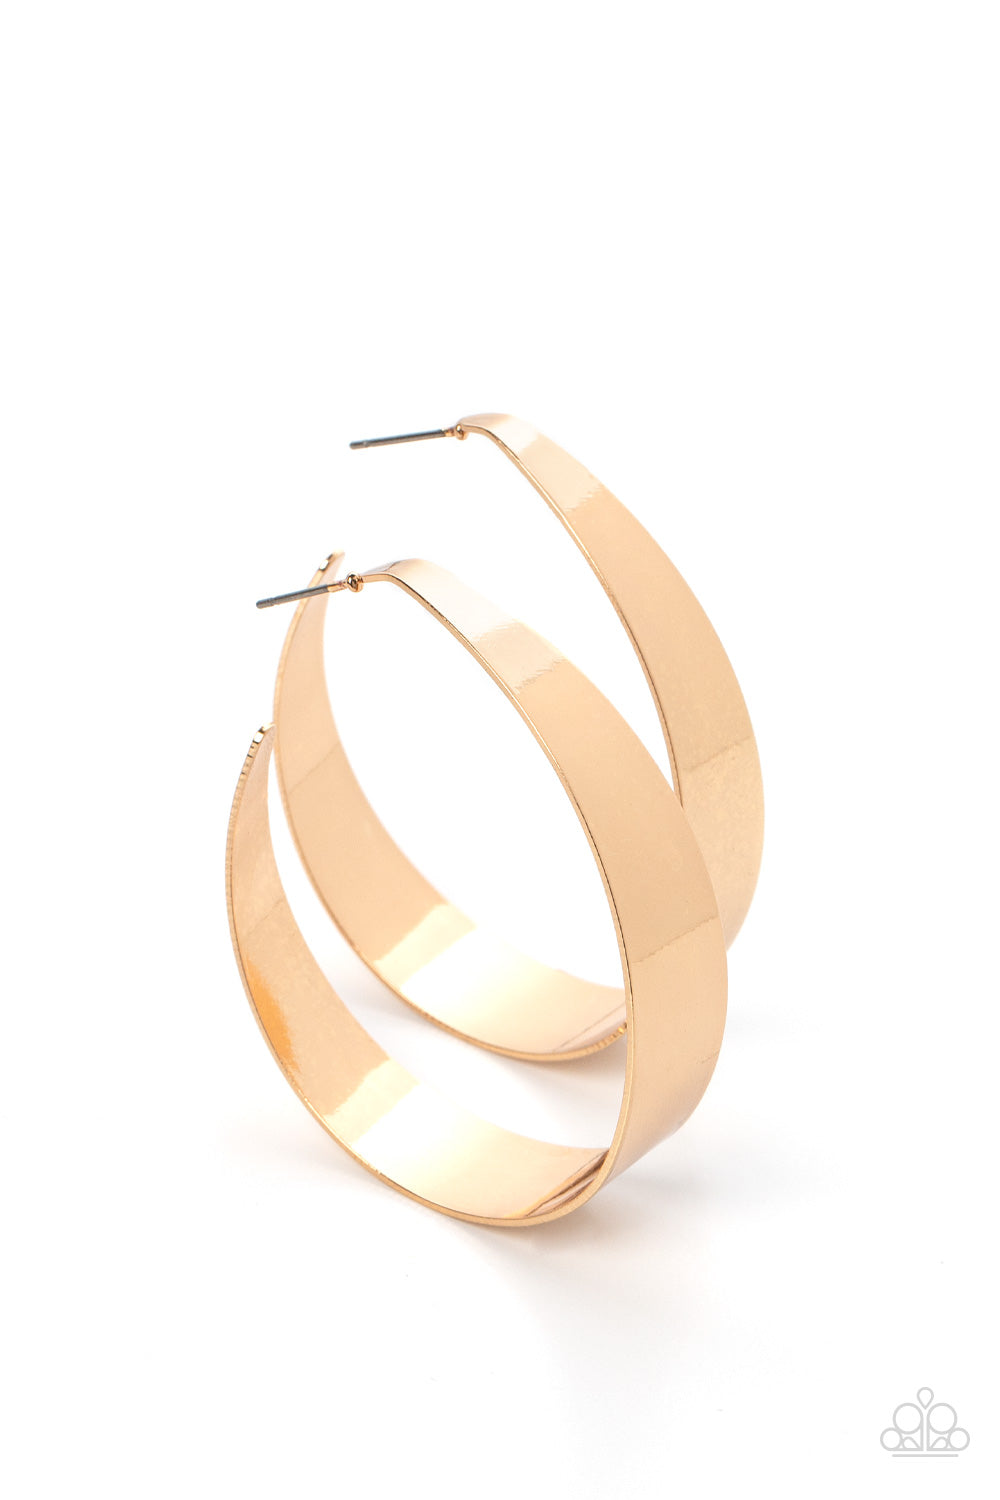 Flat Out Fashionable - Gold Hoop Earrings - Princess Glam Shop